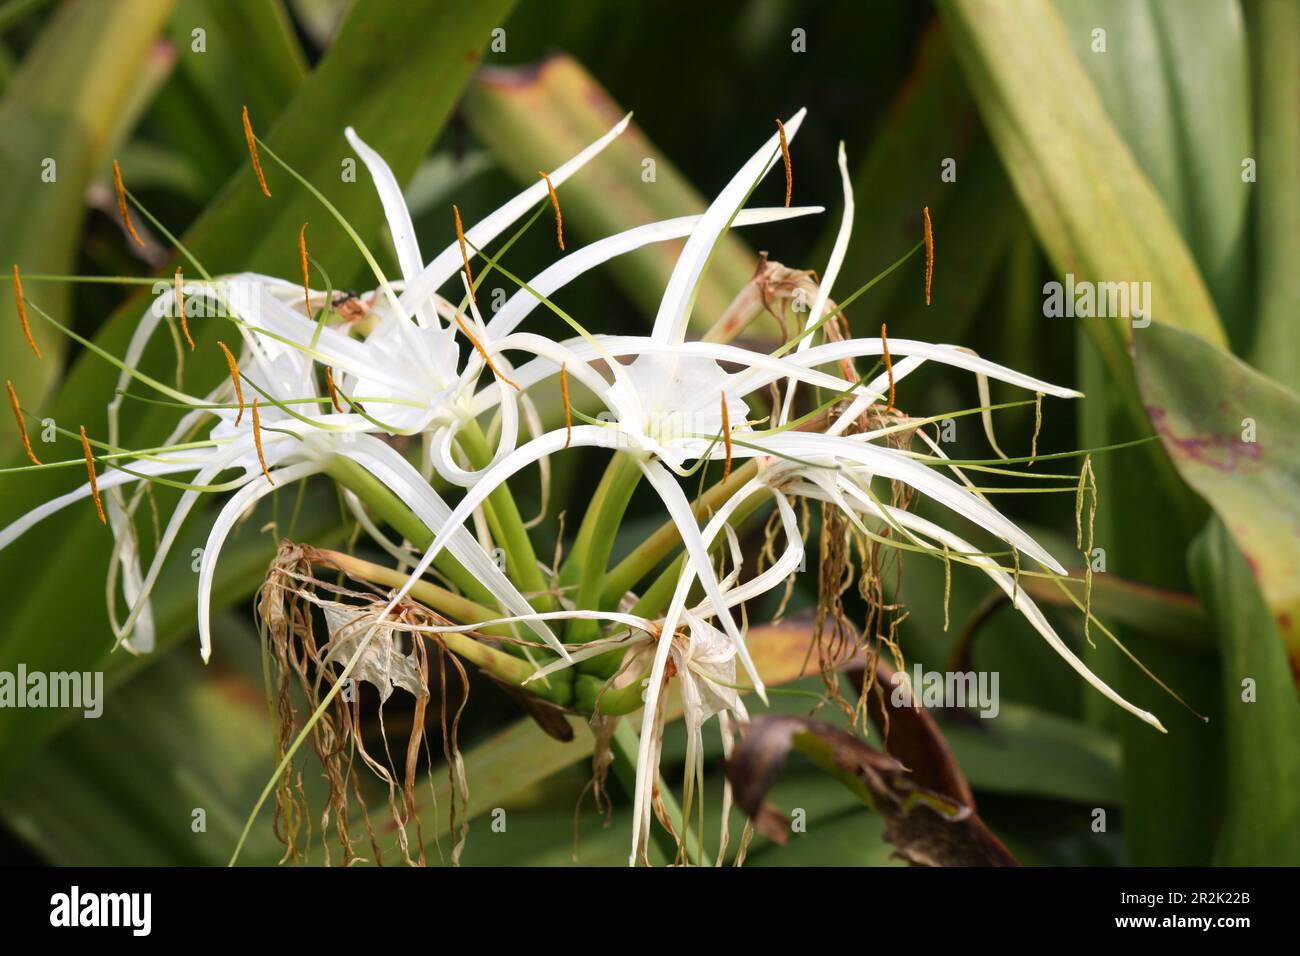 Spider lily (Crinum asiaticum) in bloom in a garden : (pix Sanjiv Shukla) Stock Photo